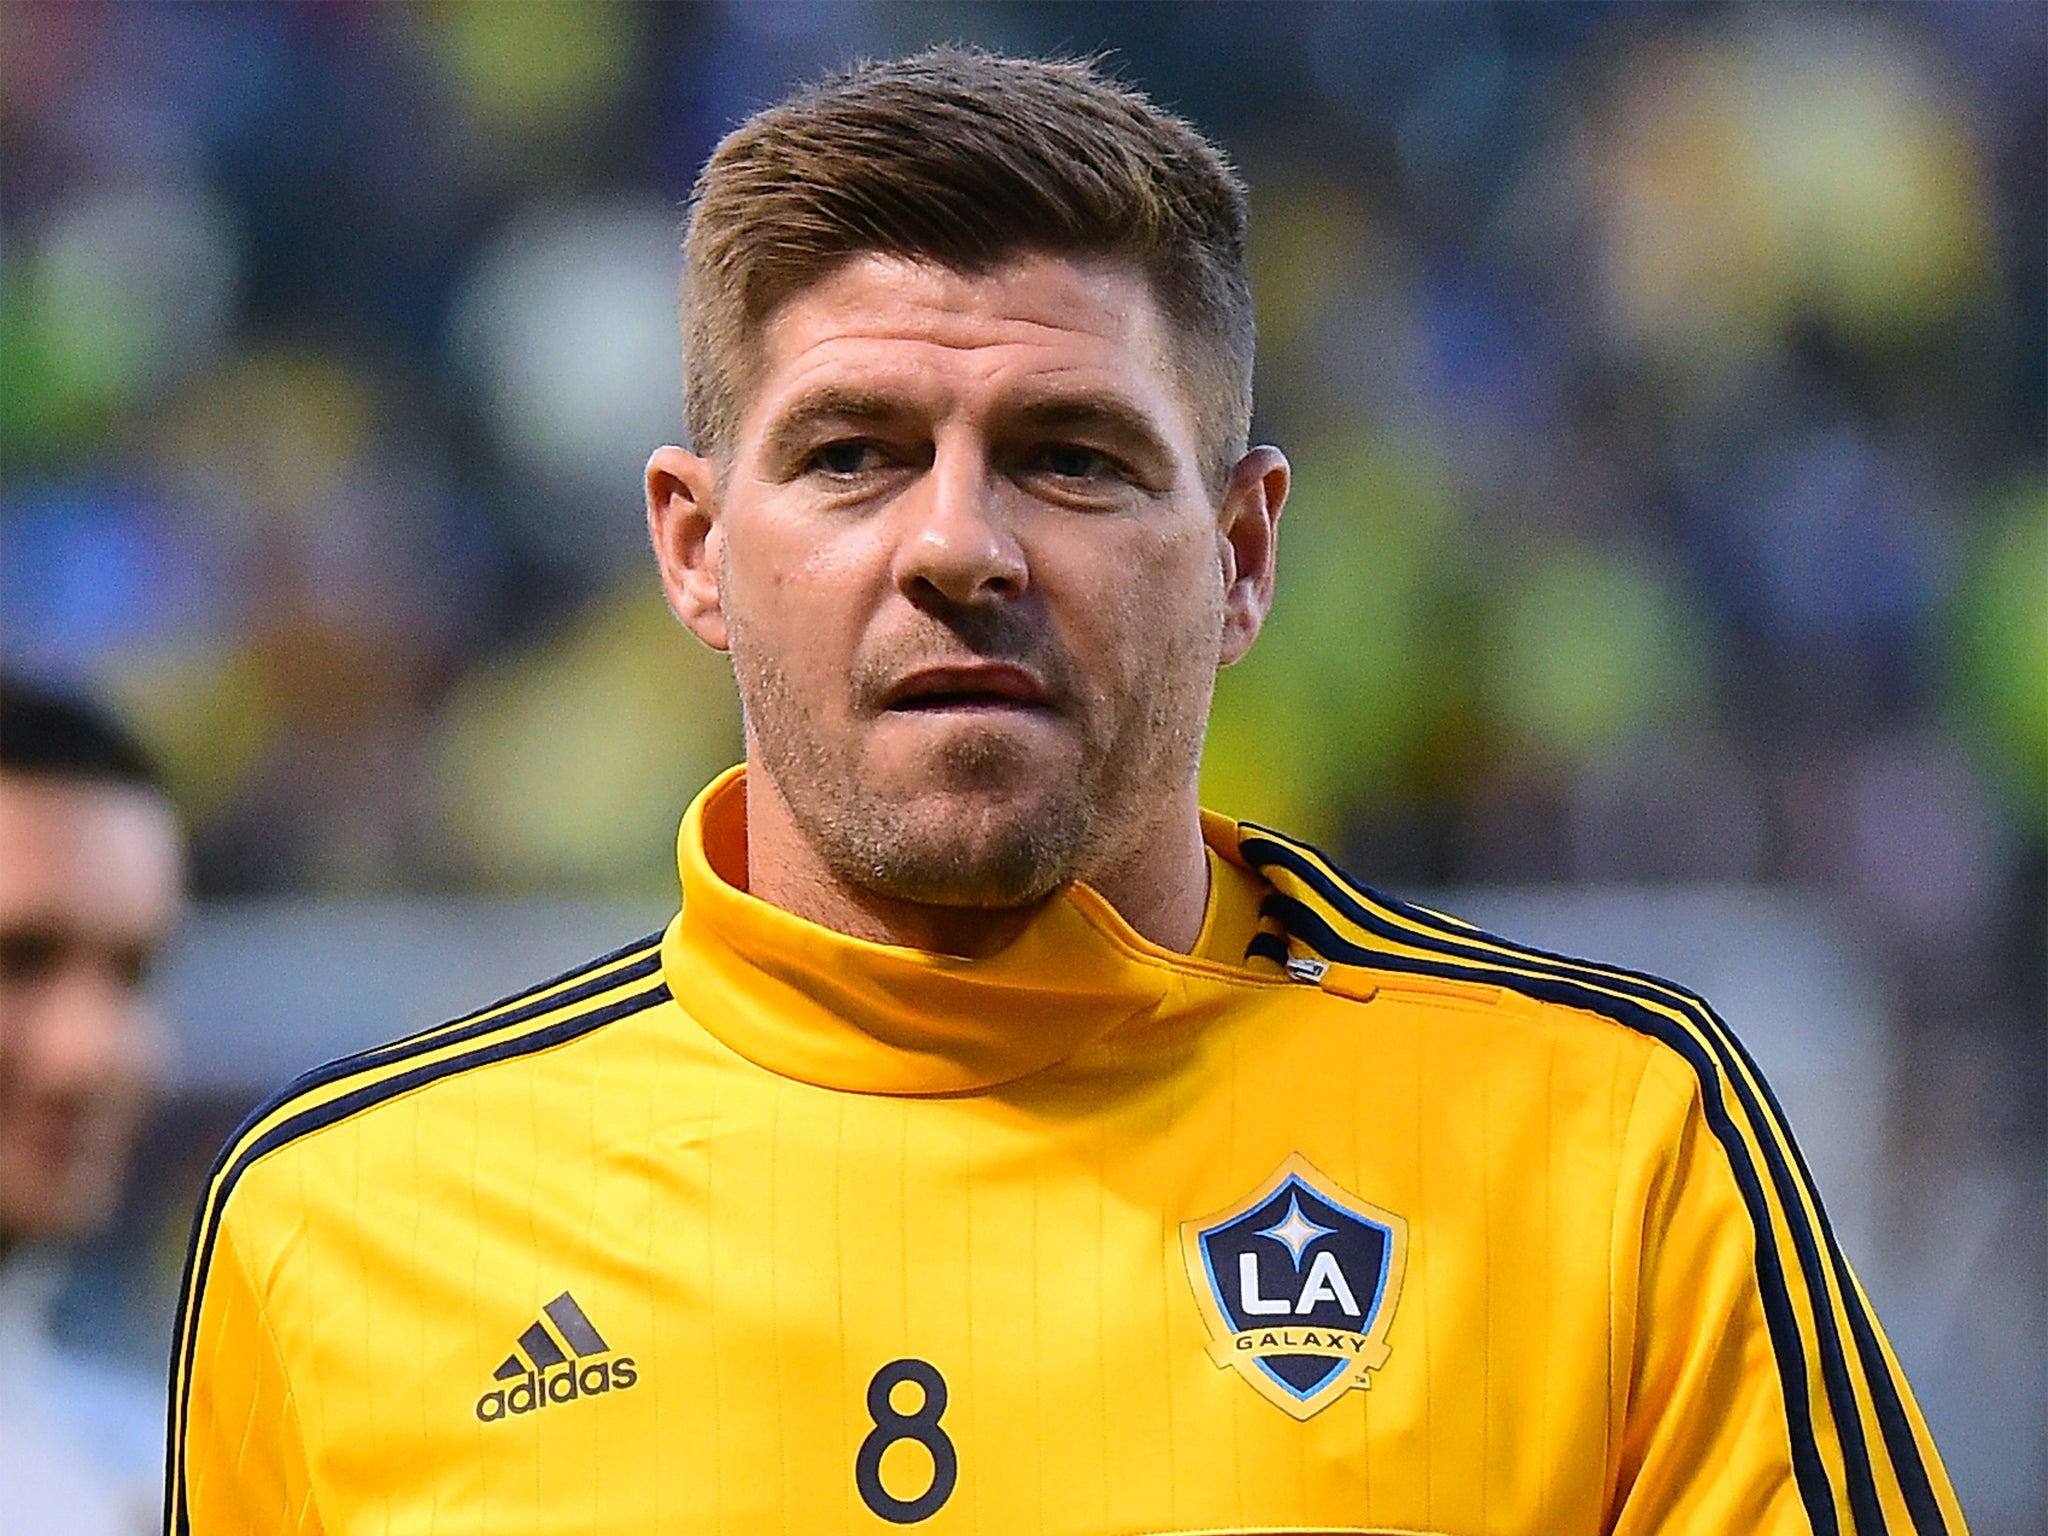 Steven Gerrard prepares to play for LA Galaxy in the MLS